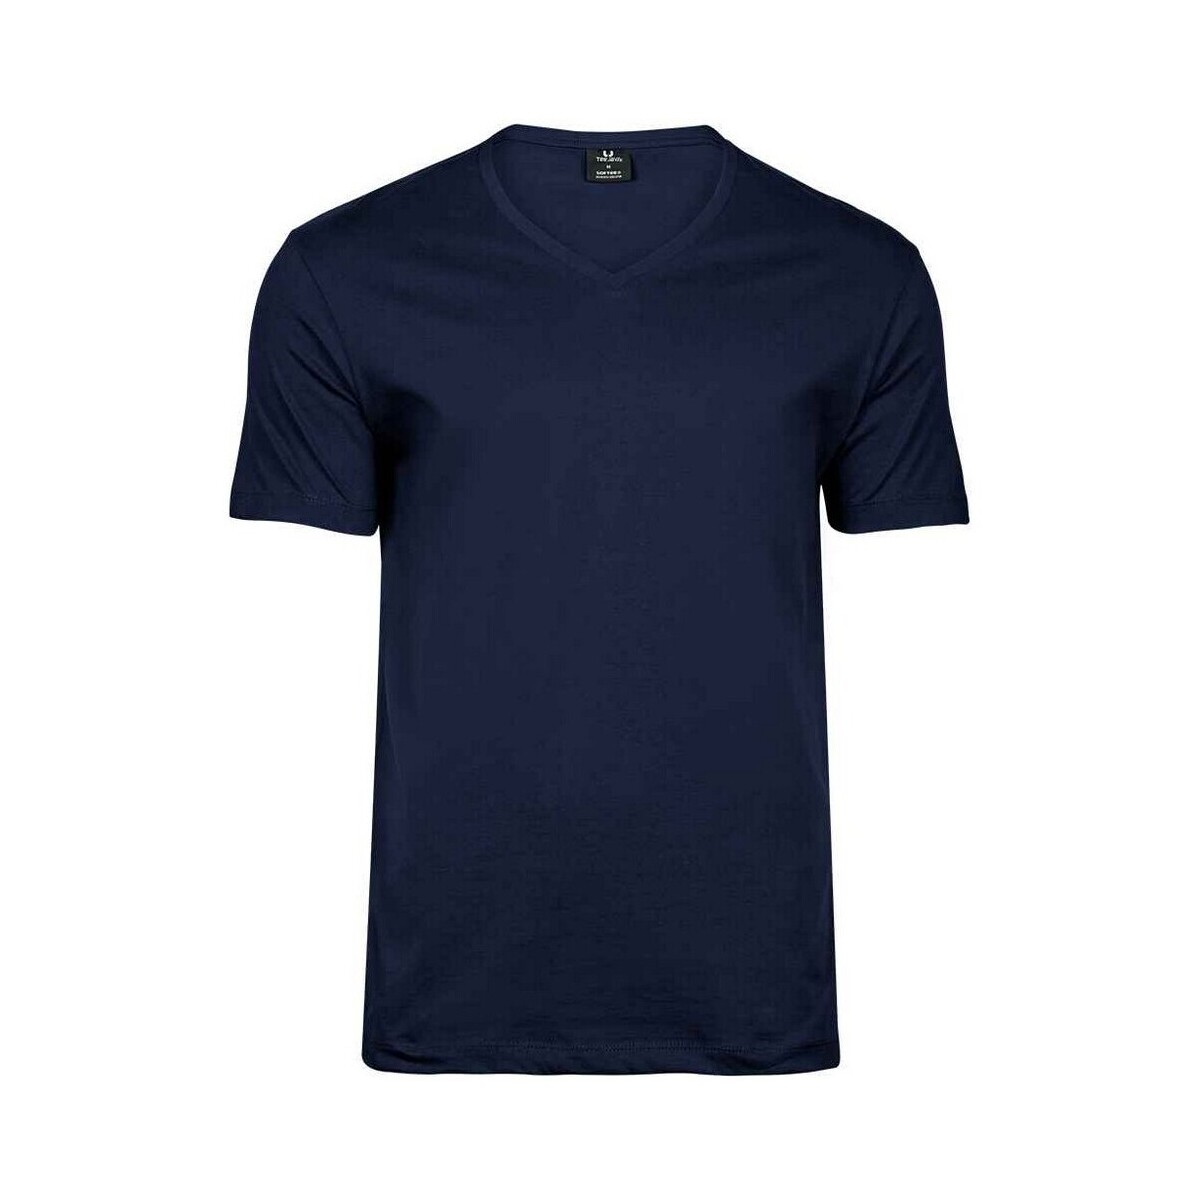 Vêtements Homme T-shirts manches longues Tee Jays Sof Bleu